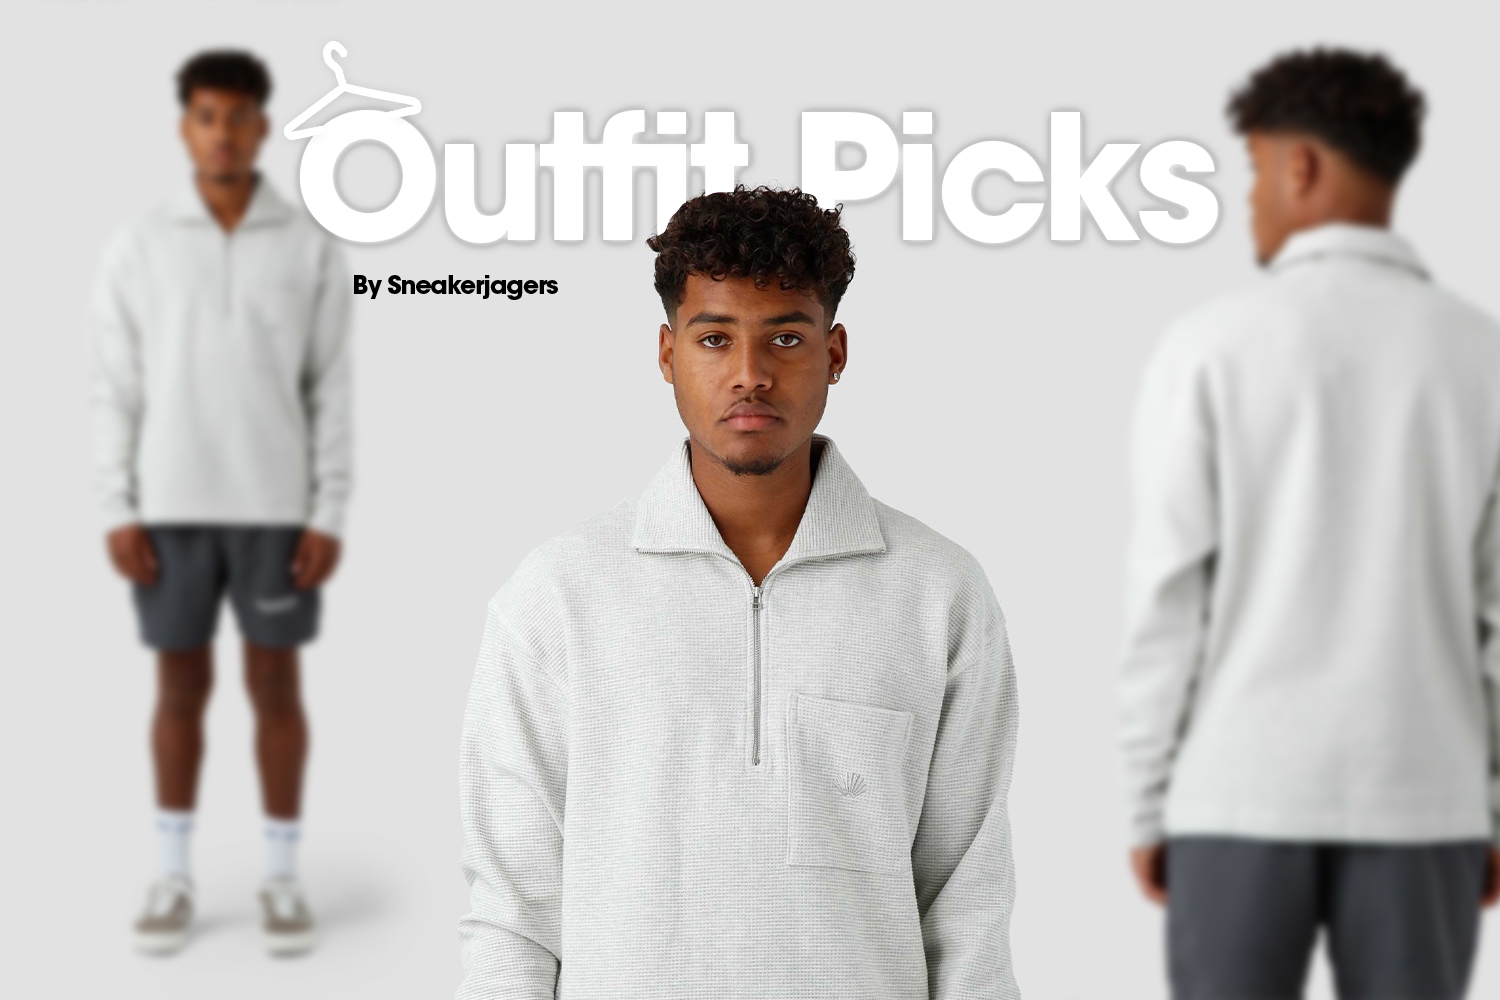 Die Outfit Picks by Sneakerjagers - Woche 34